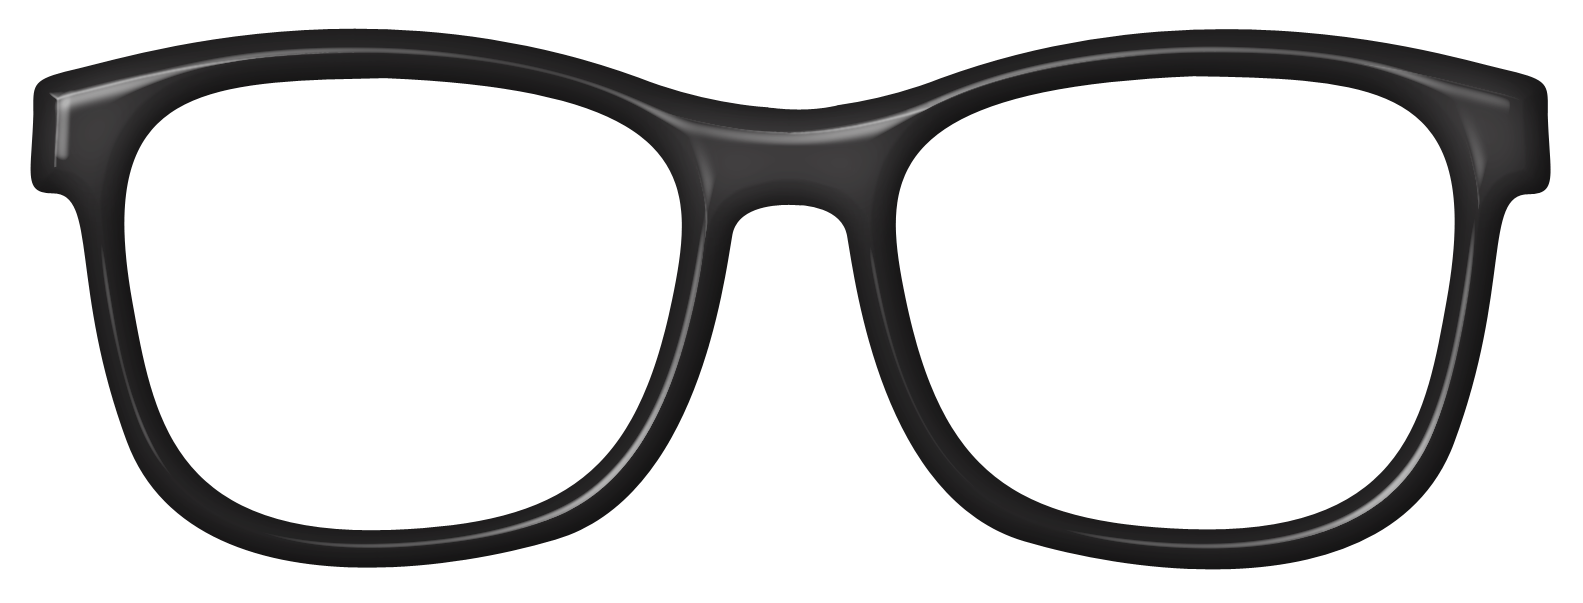 Glasses Clipart Image